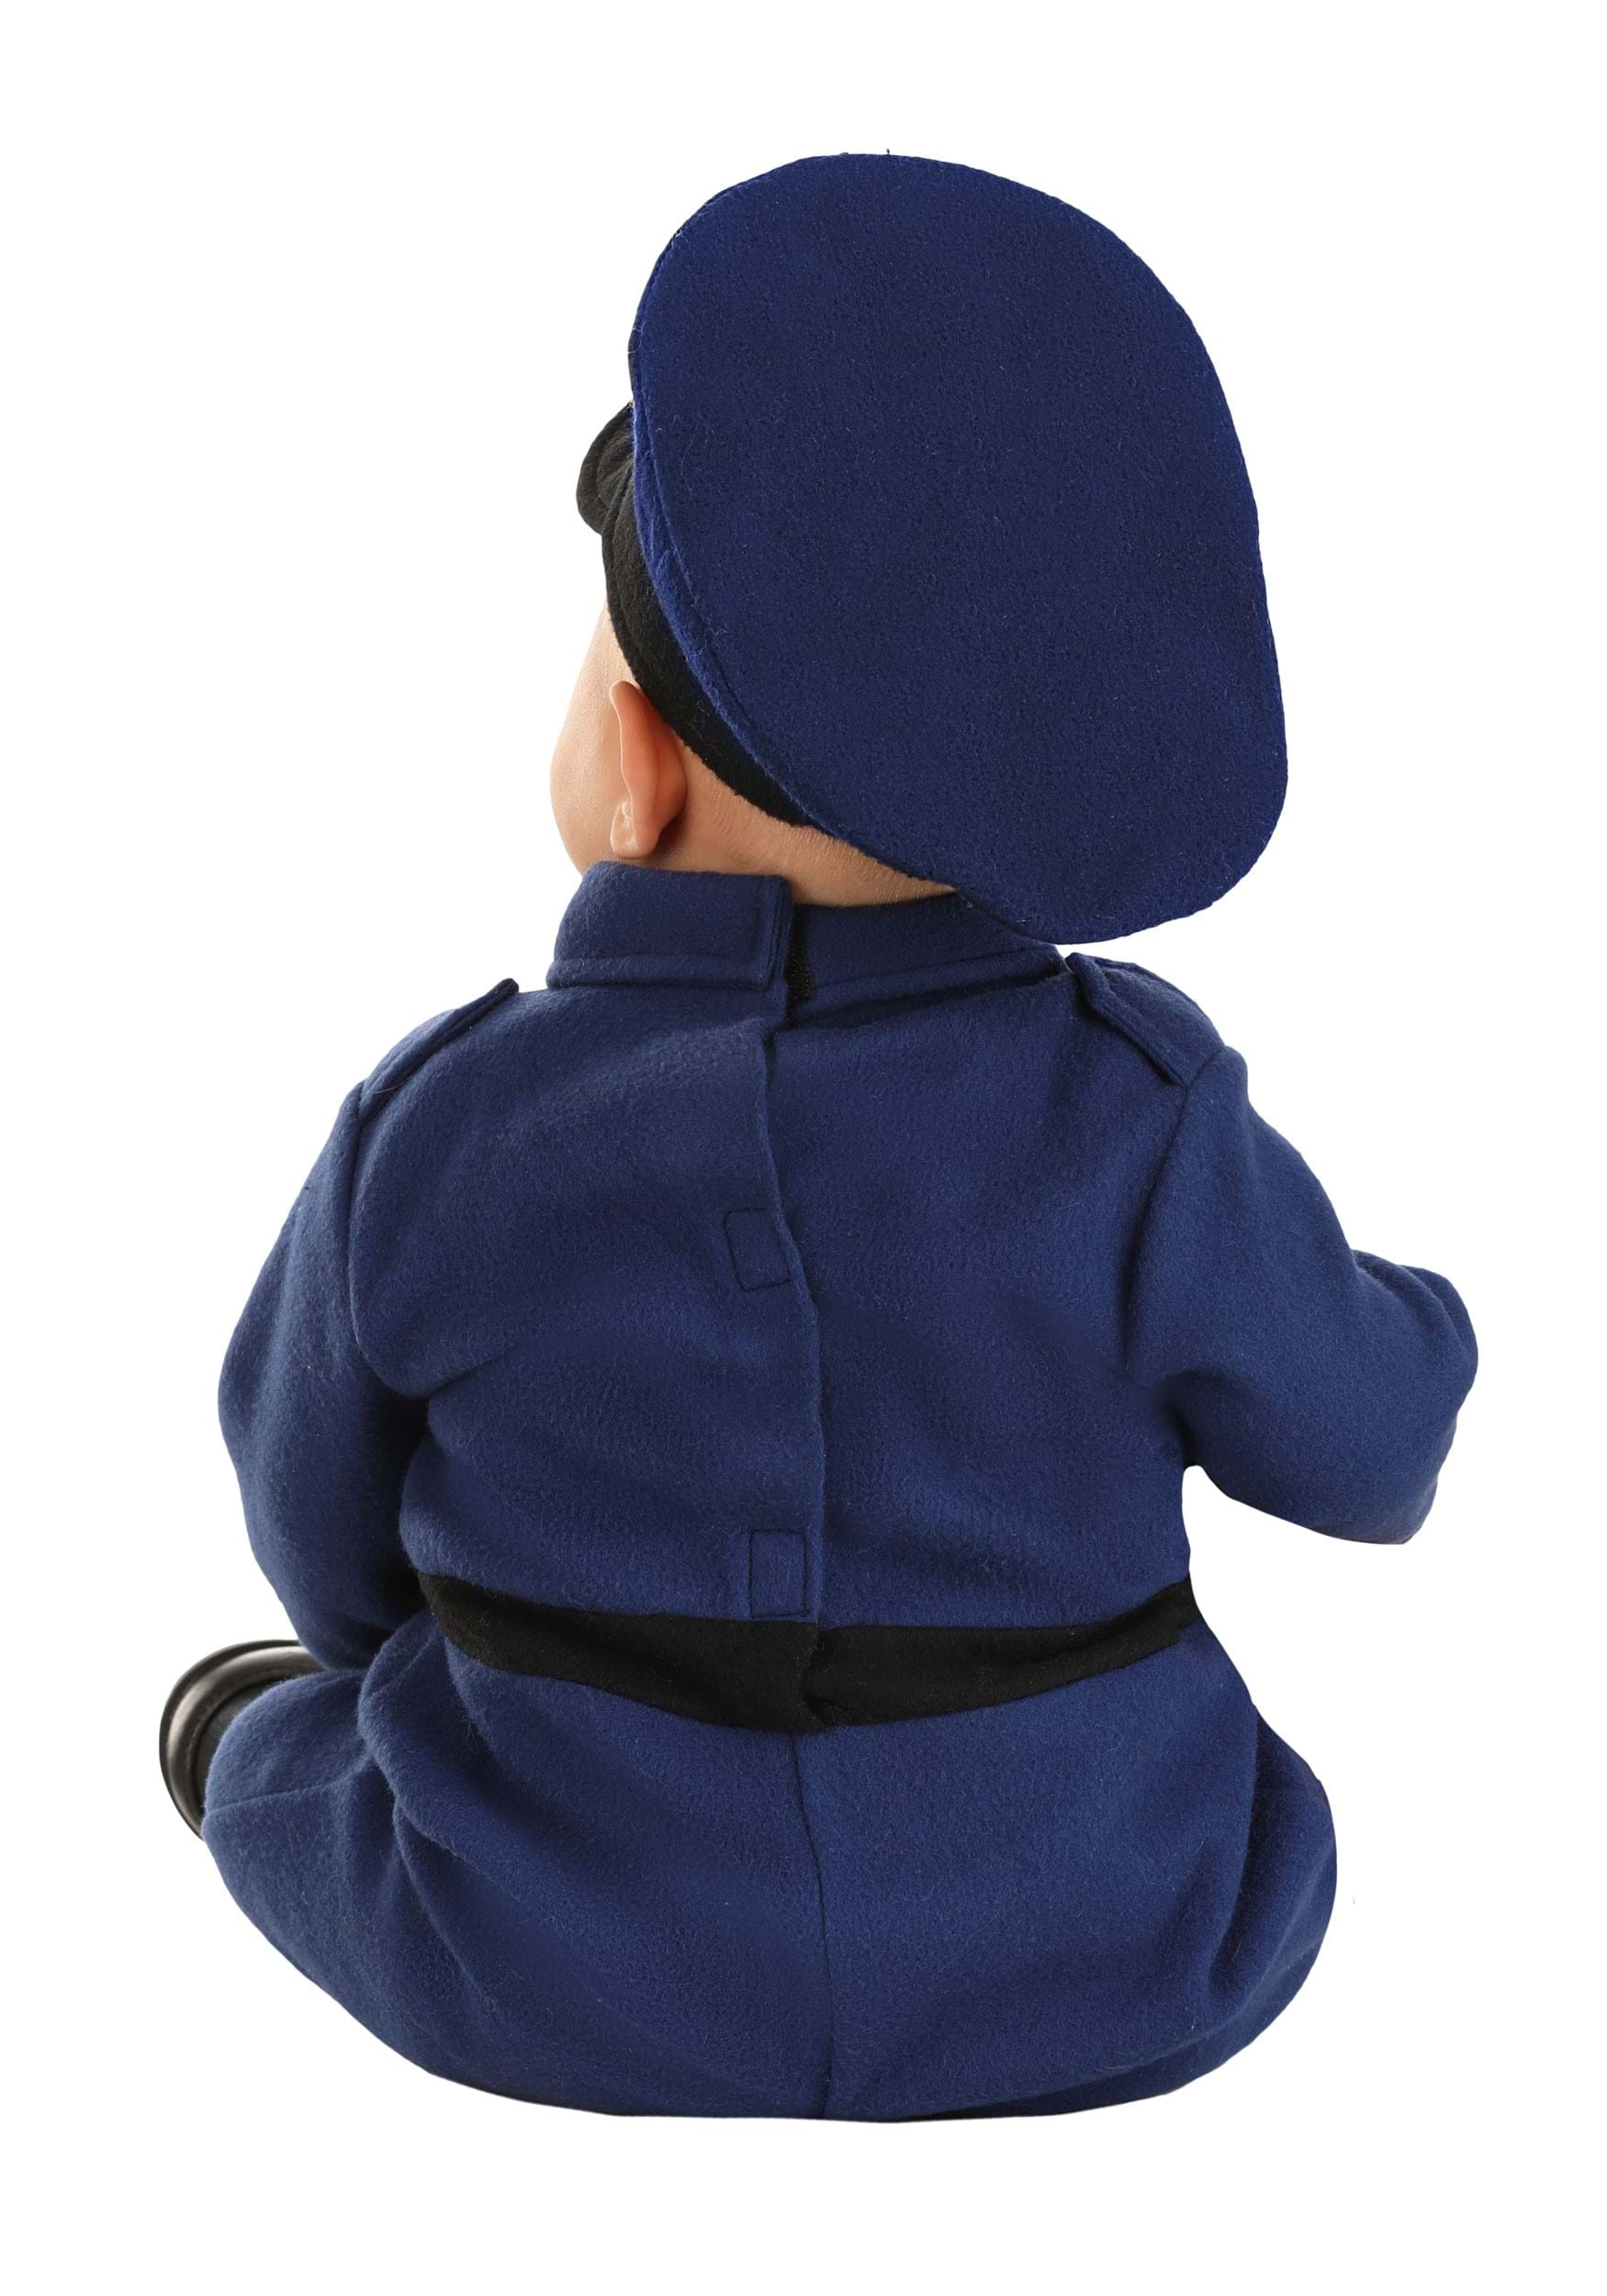 Police Officer Infant Costume